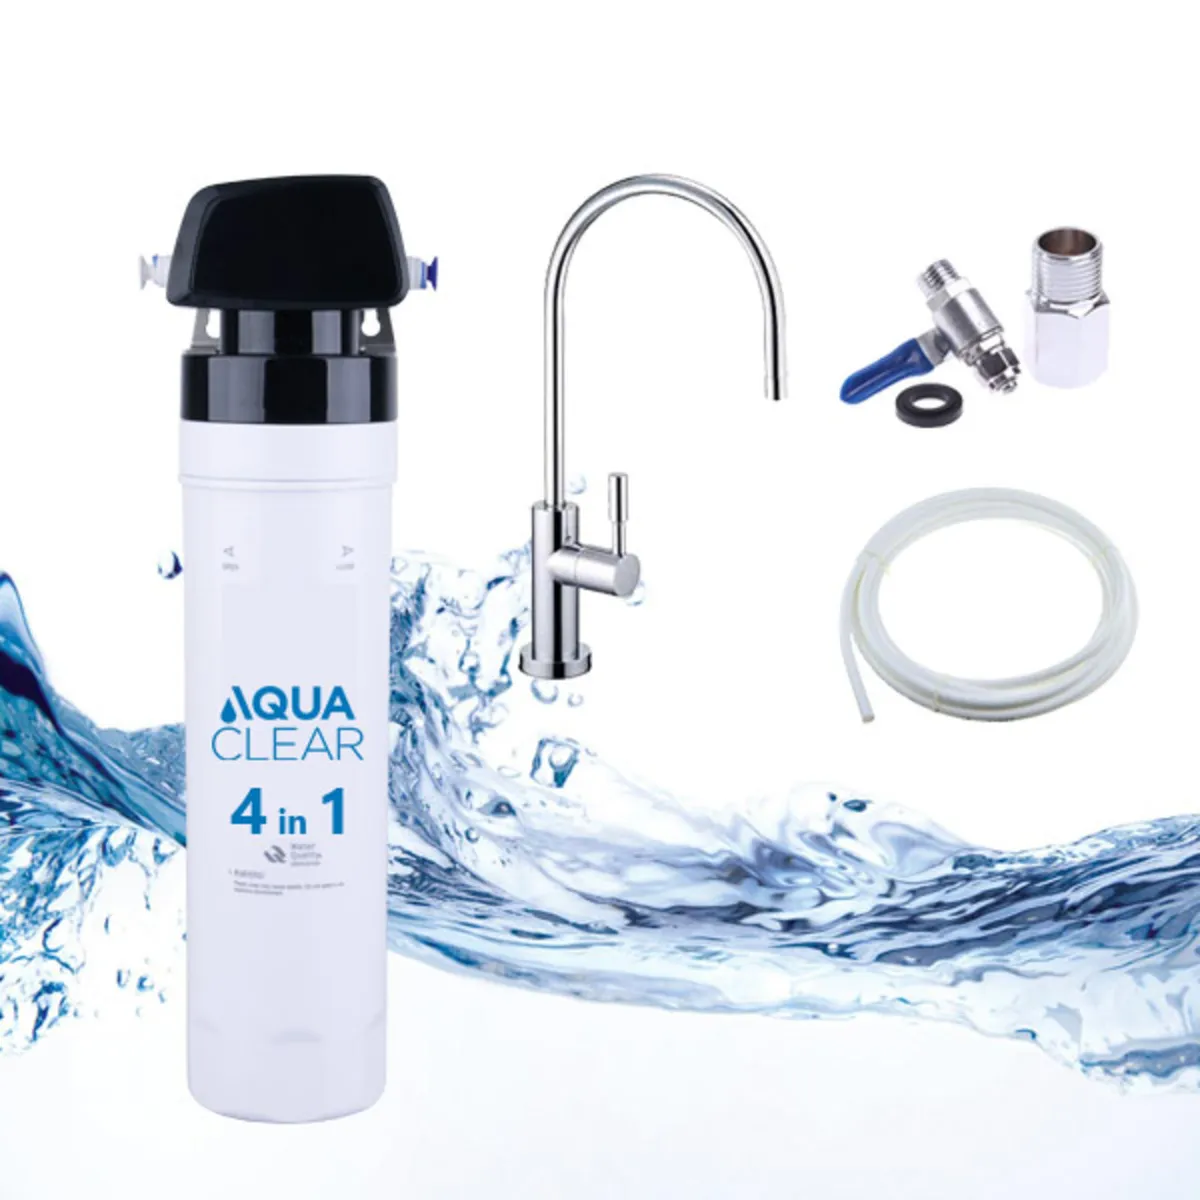 Aquaclear 4in1 Filter & Tap